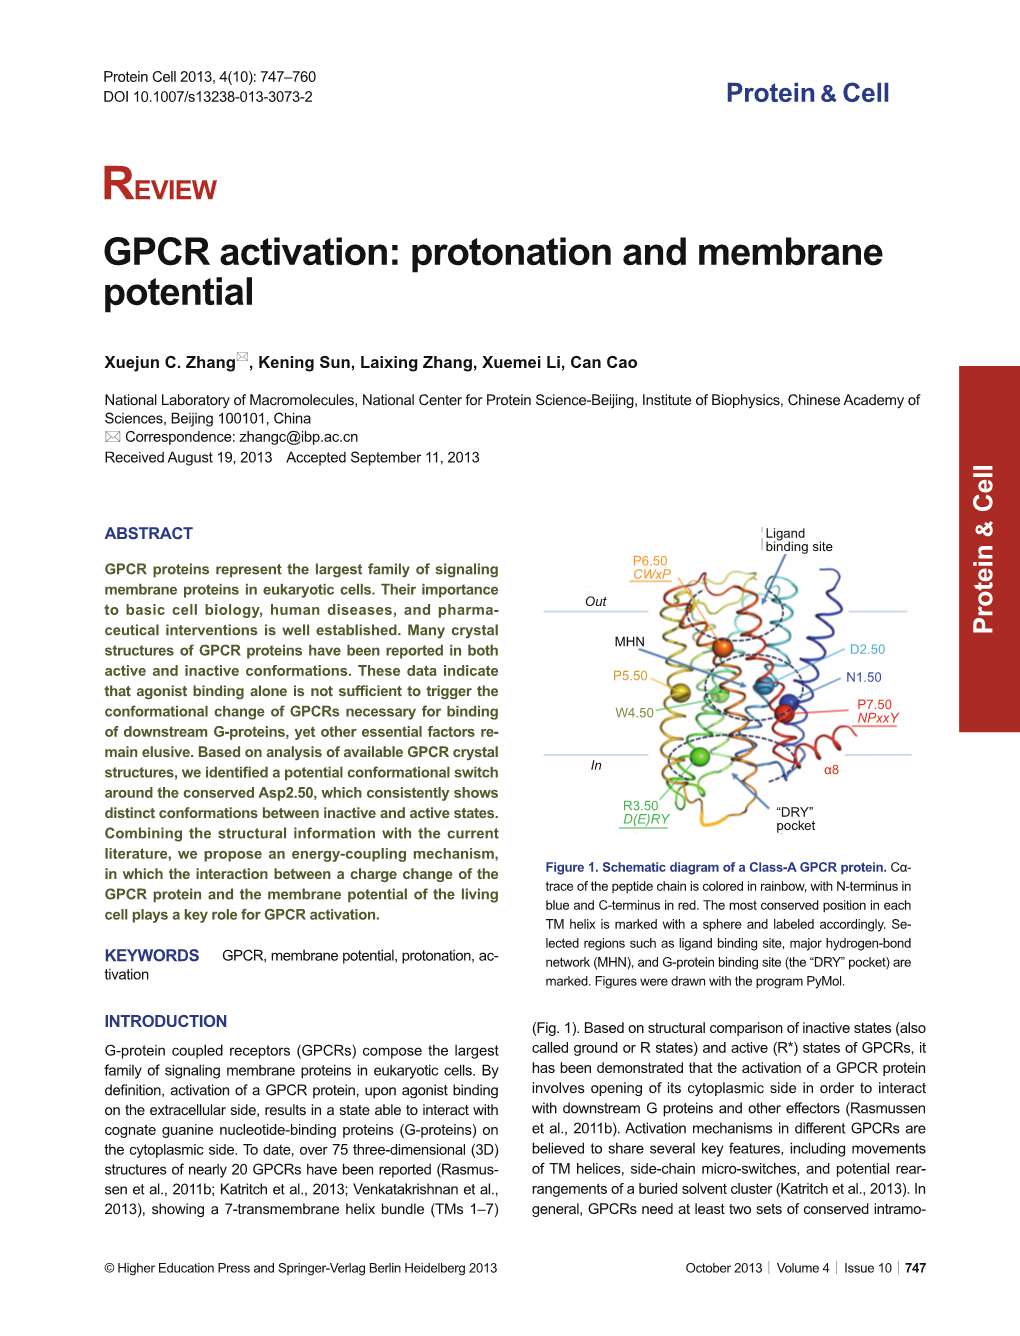 GPCR Activation: Protonation and Membrane Potential